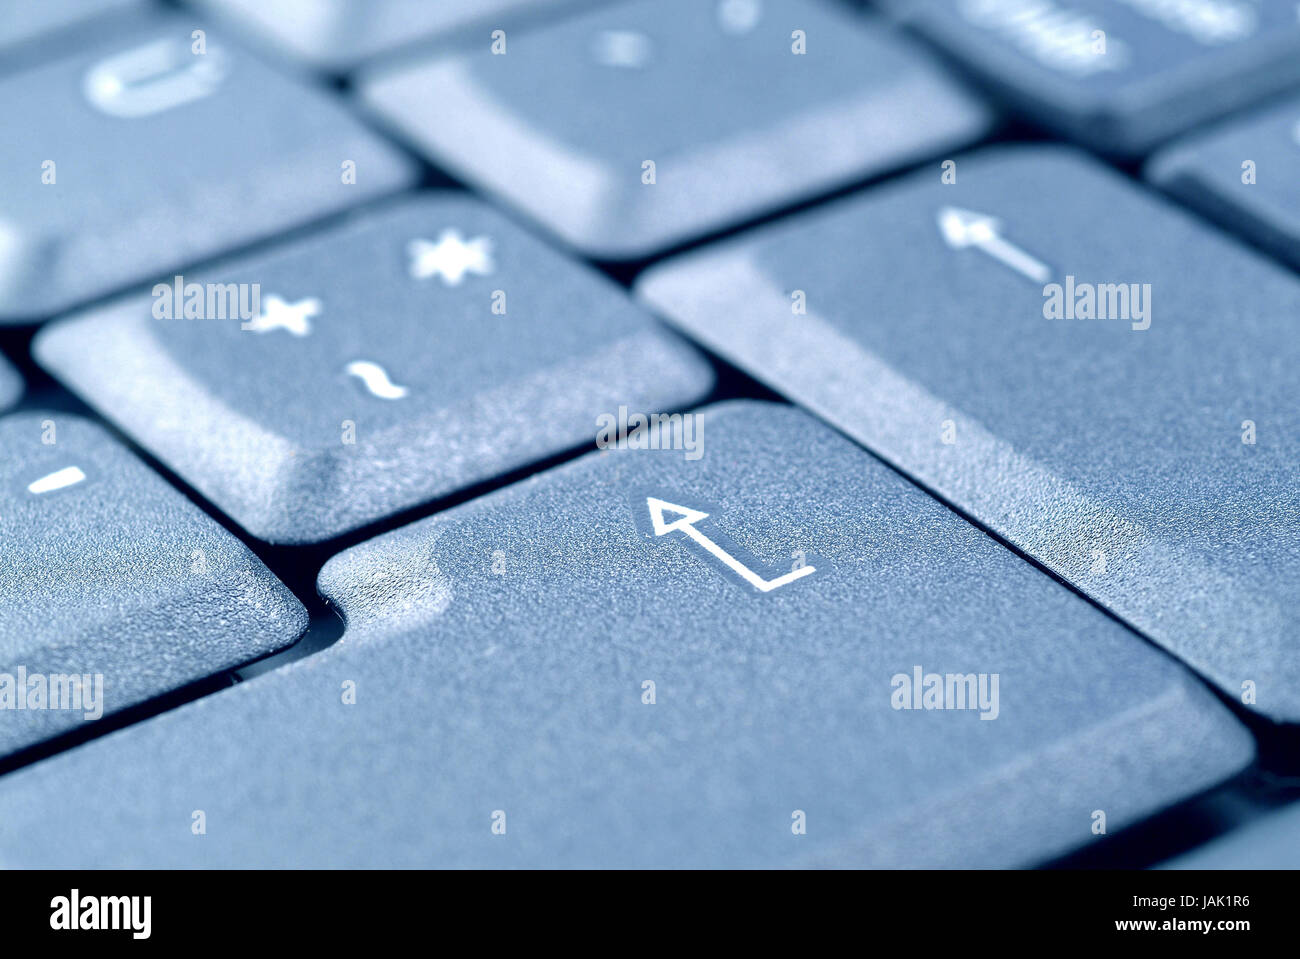 Computer keyboard,Enter button, Stock Photo